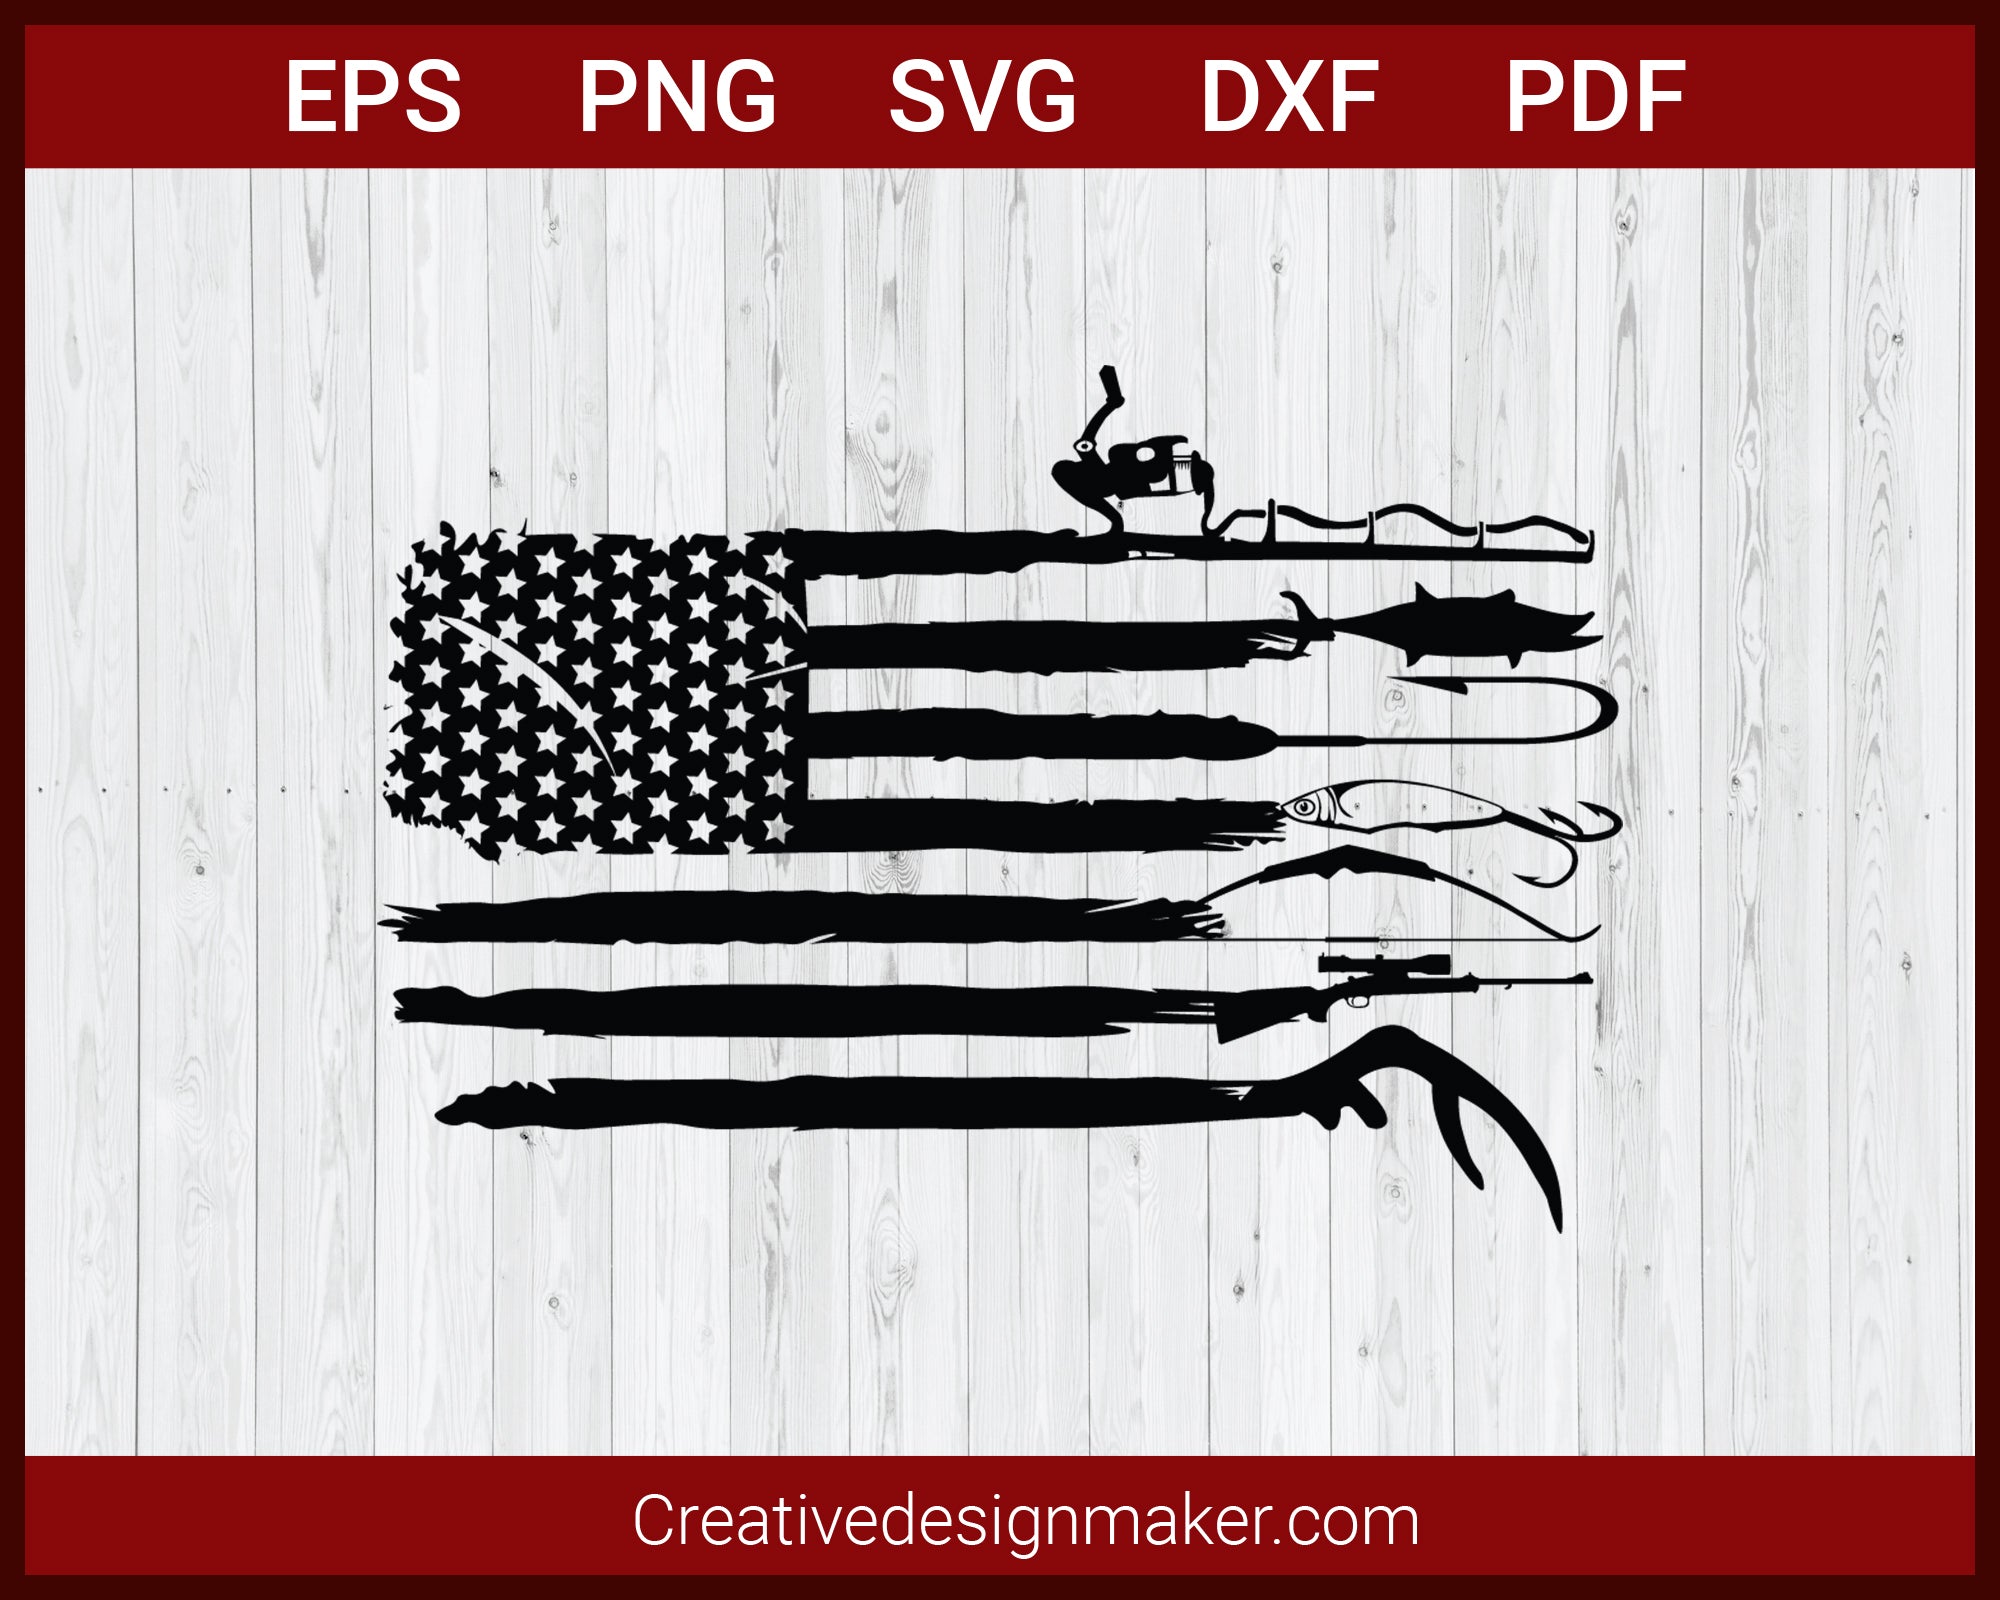 Custom Thread Art - Hunting & Fishing American Flag Design! This